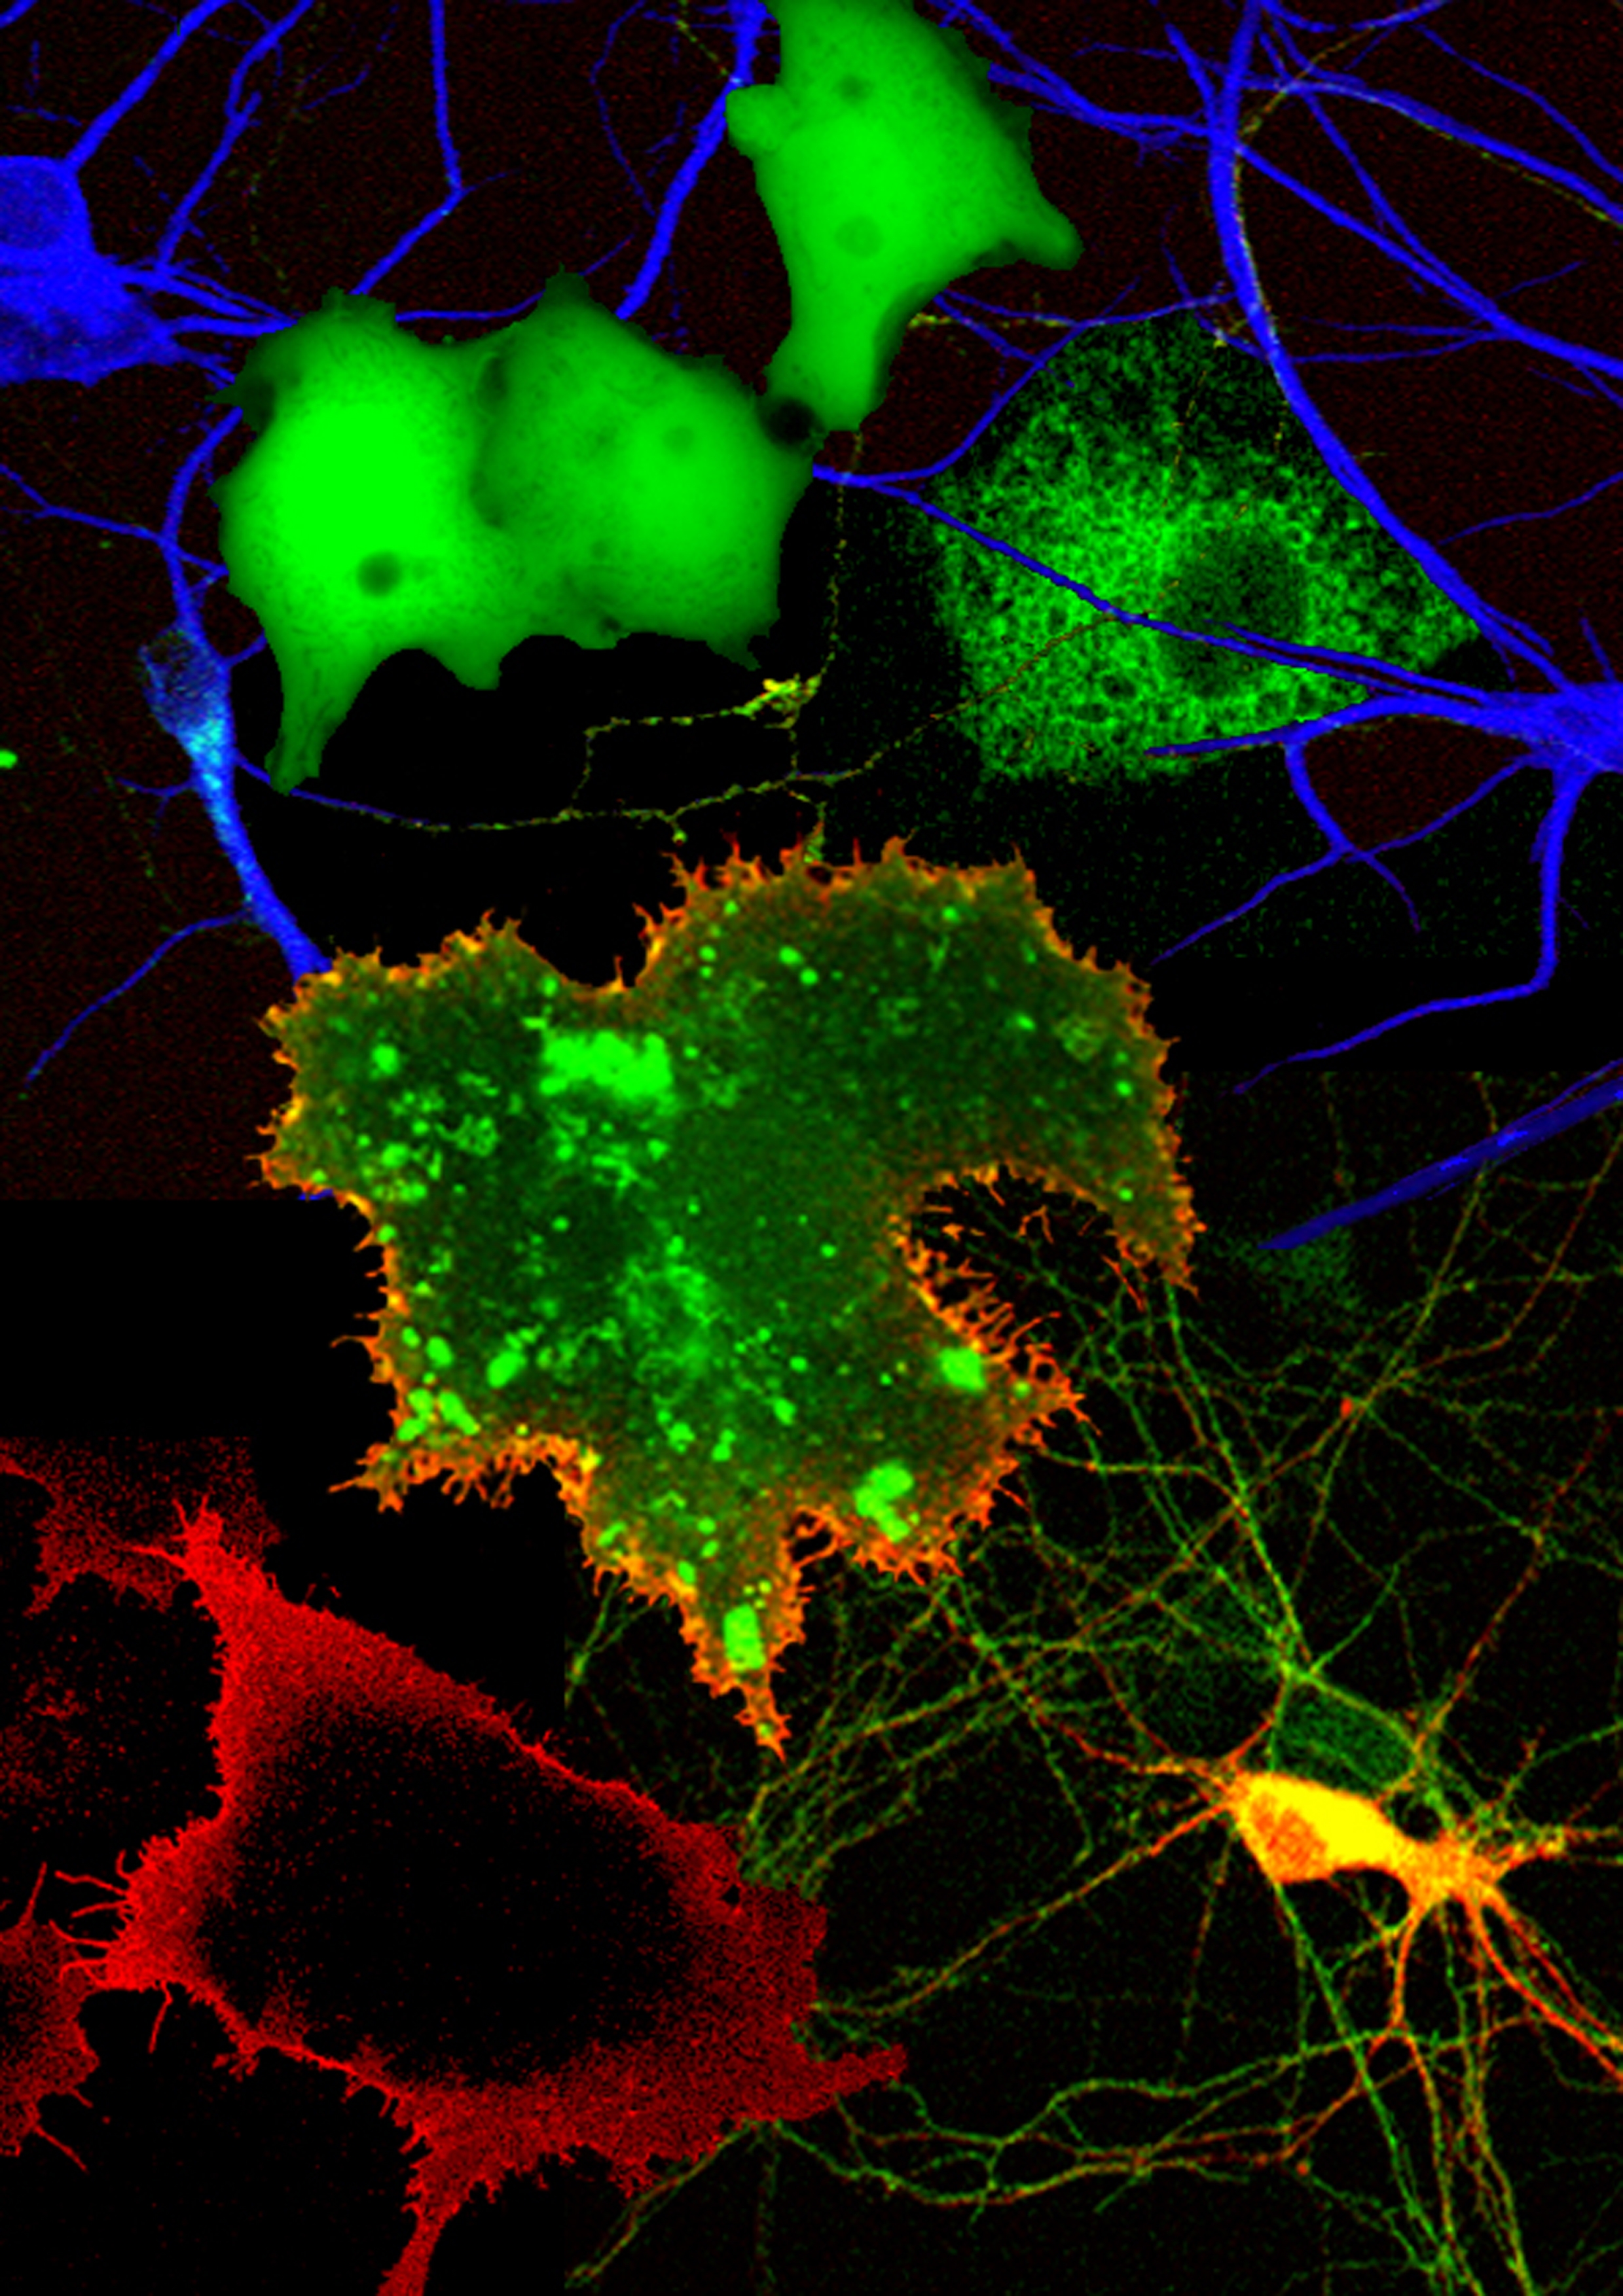 Dr andy Irving - image of neurological receptors